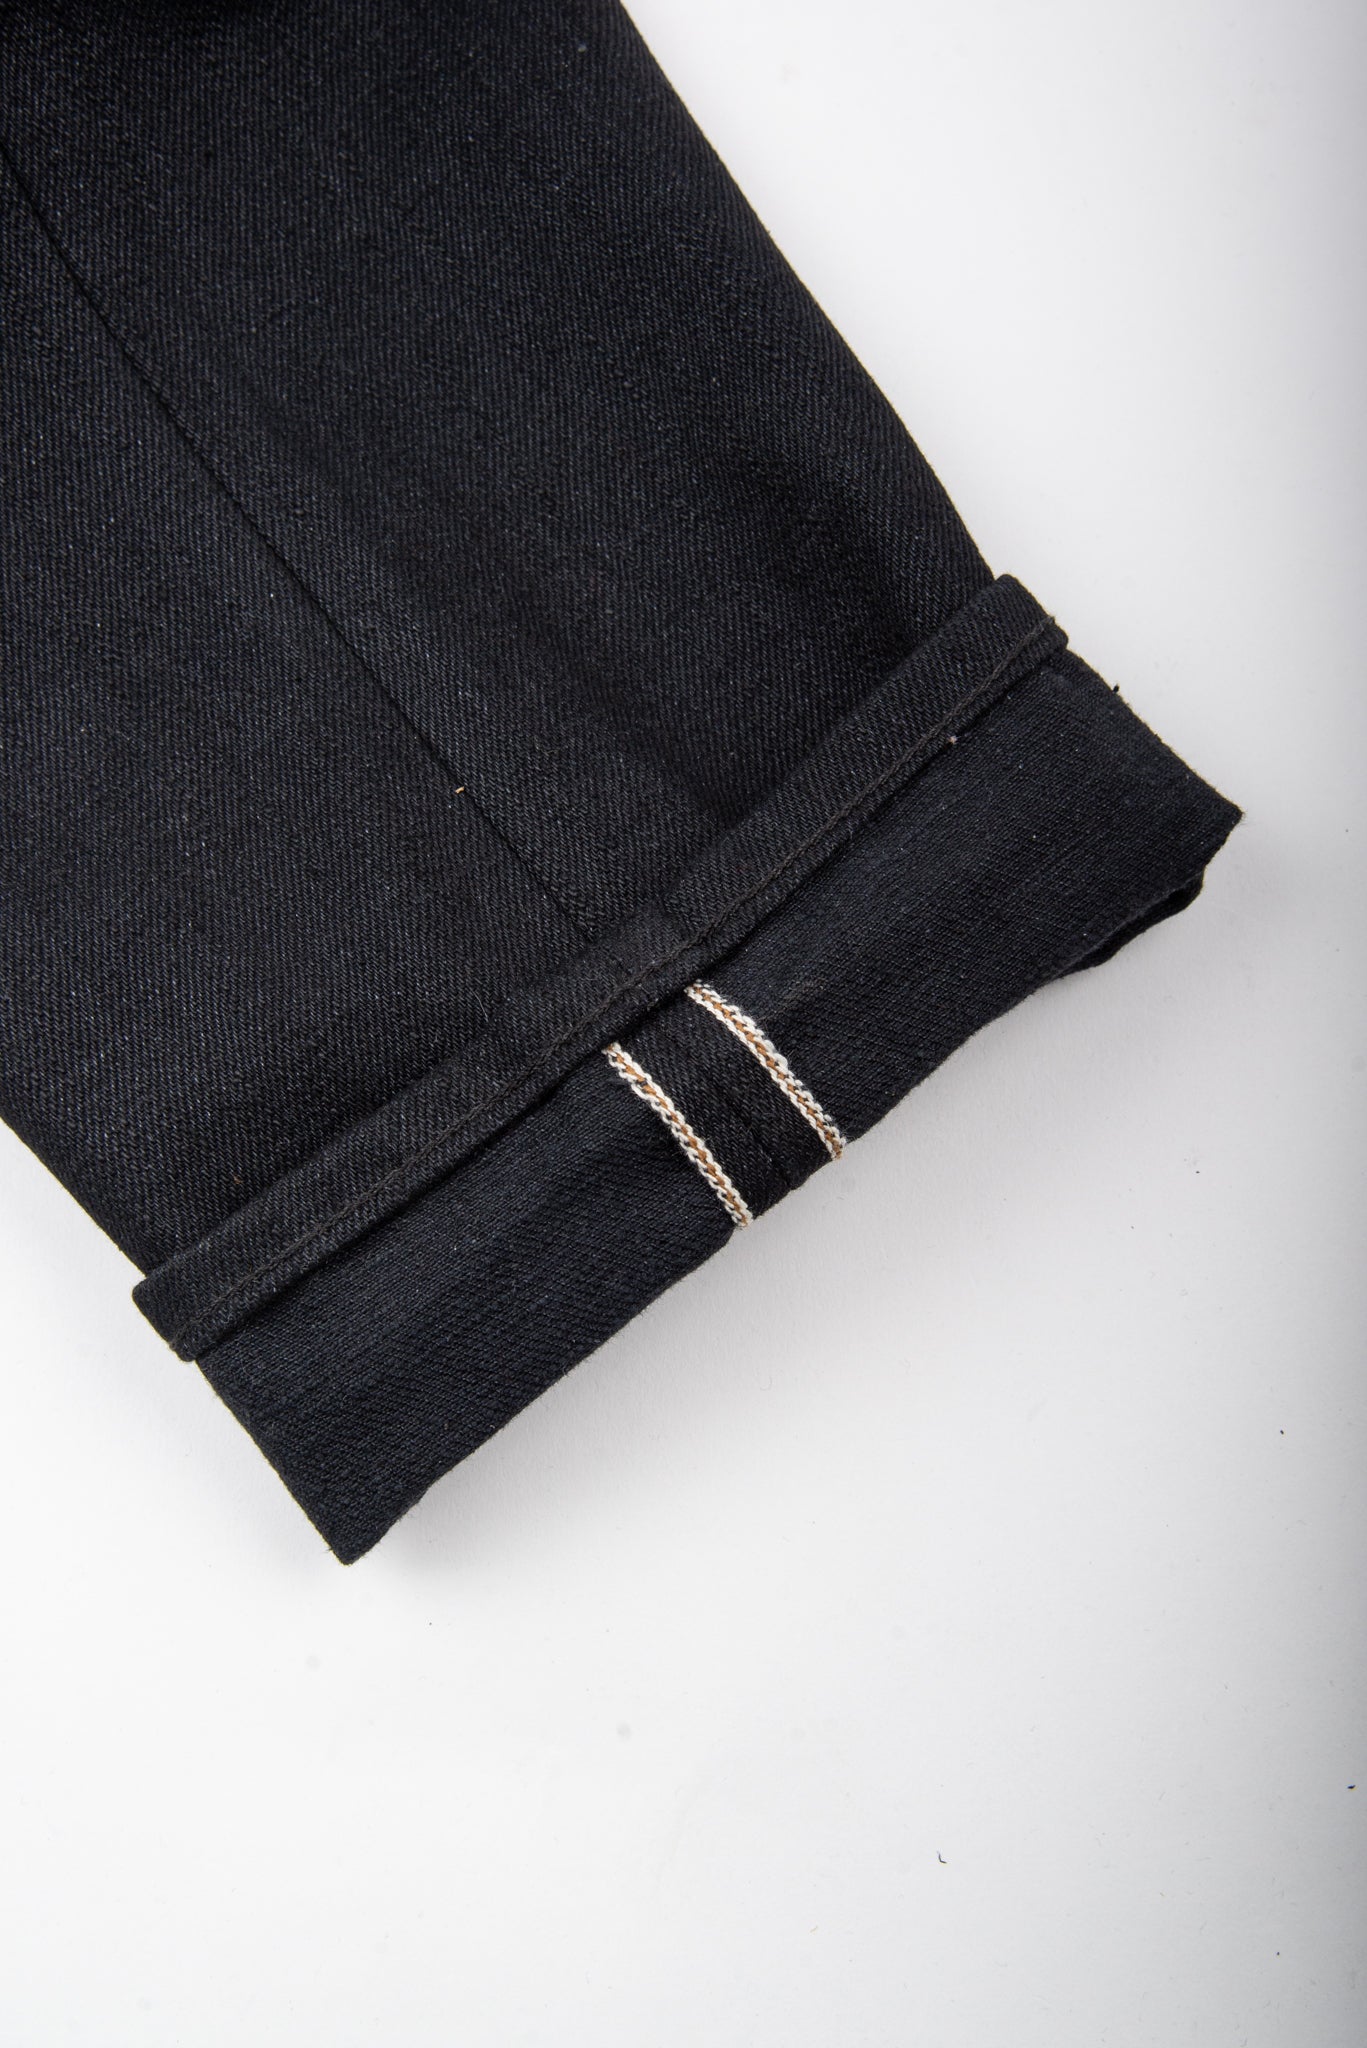 Samurai Jeans S710NBKII 17oz Color-Fast Black x Black Selvedge Jeans –